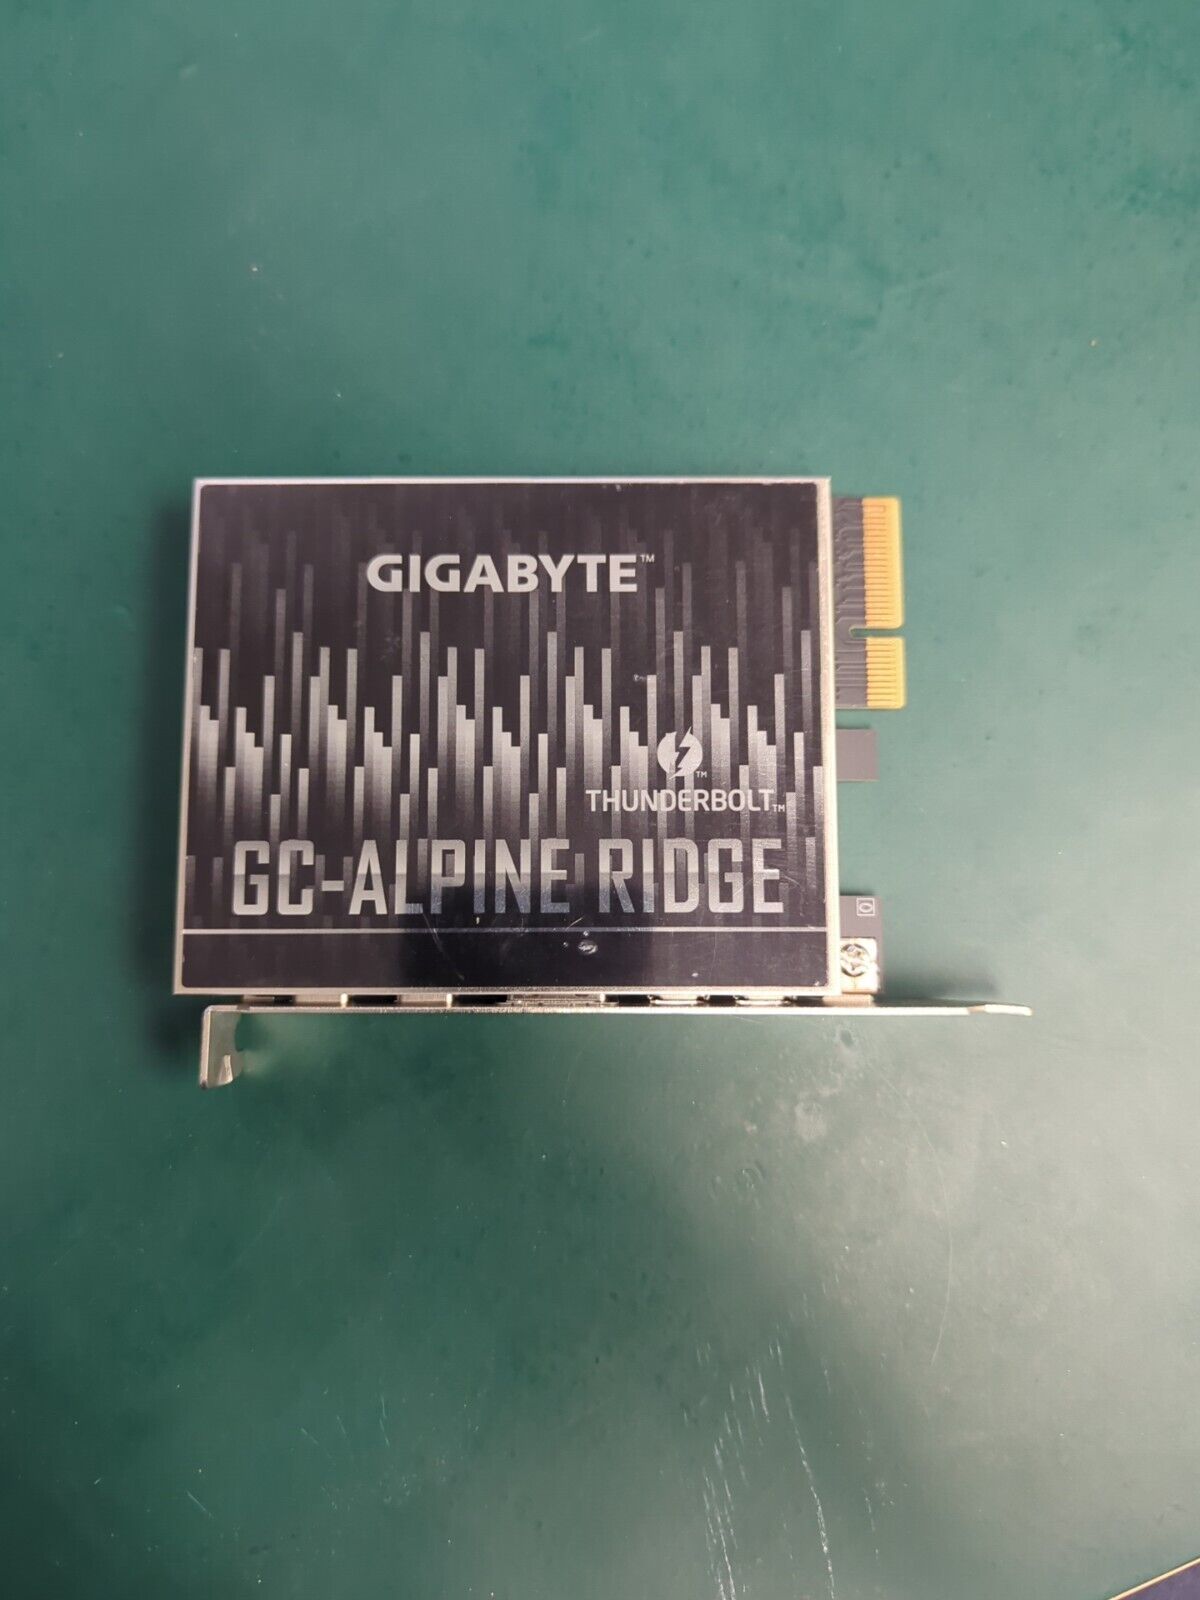 Gigabyte GC-Alpine Ridge Thunderbolt 3 USB-C (DEVICE ONLY)